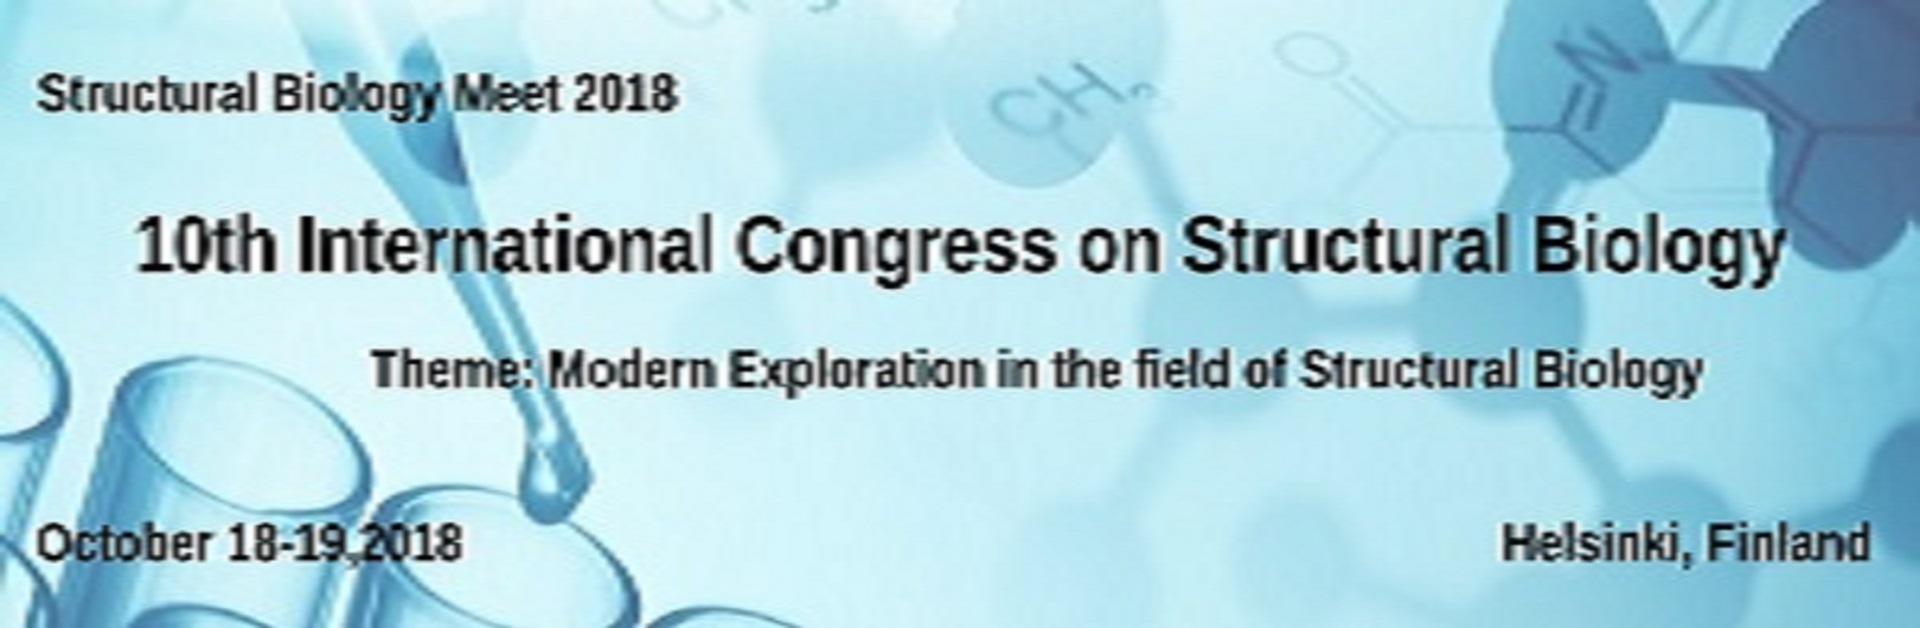 10th International Congress on Structural Biology, Helsinki, Finland